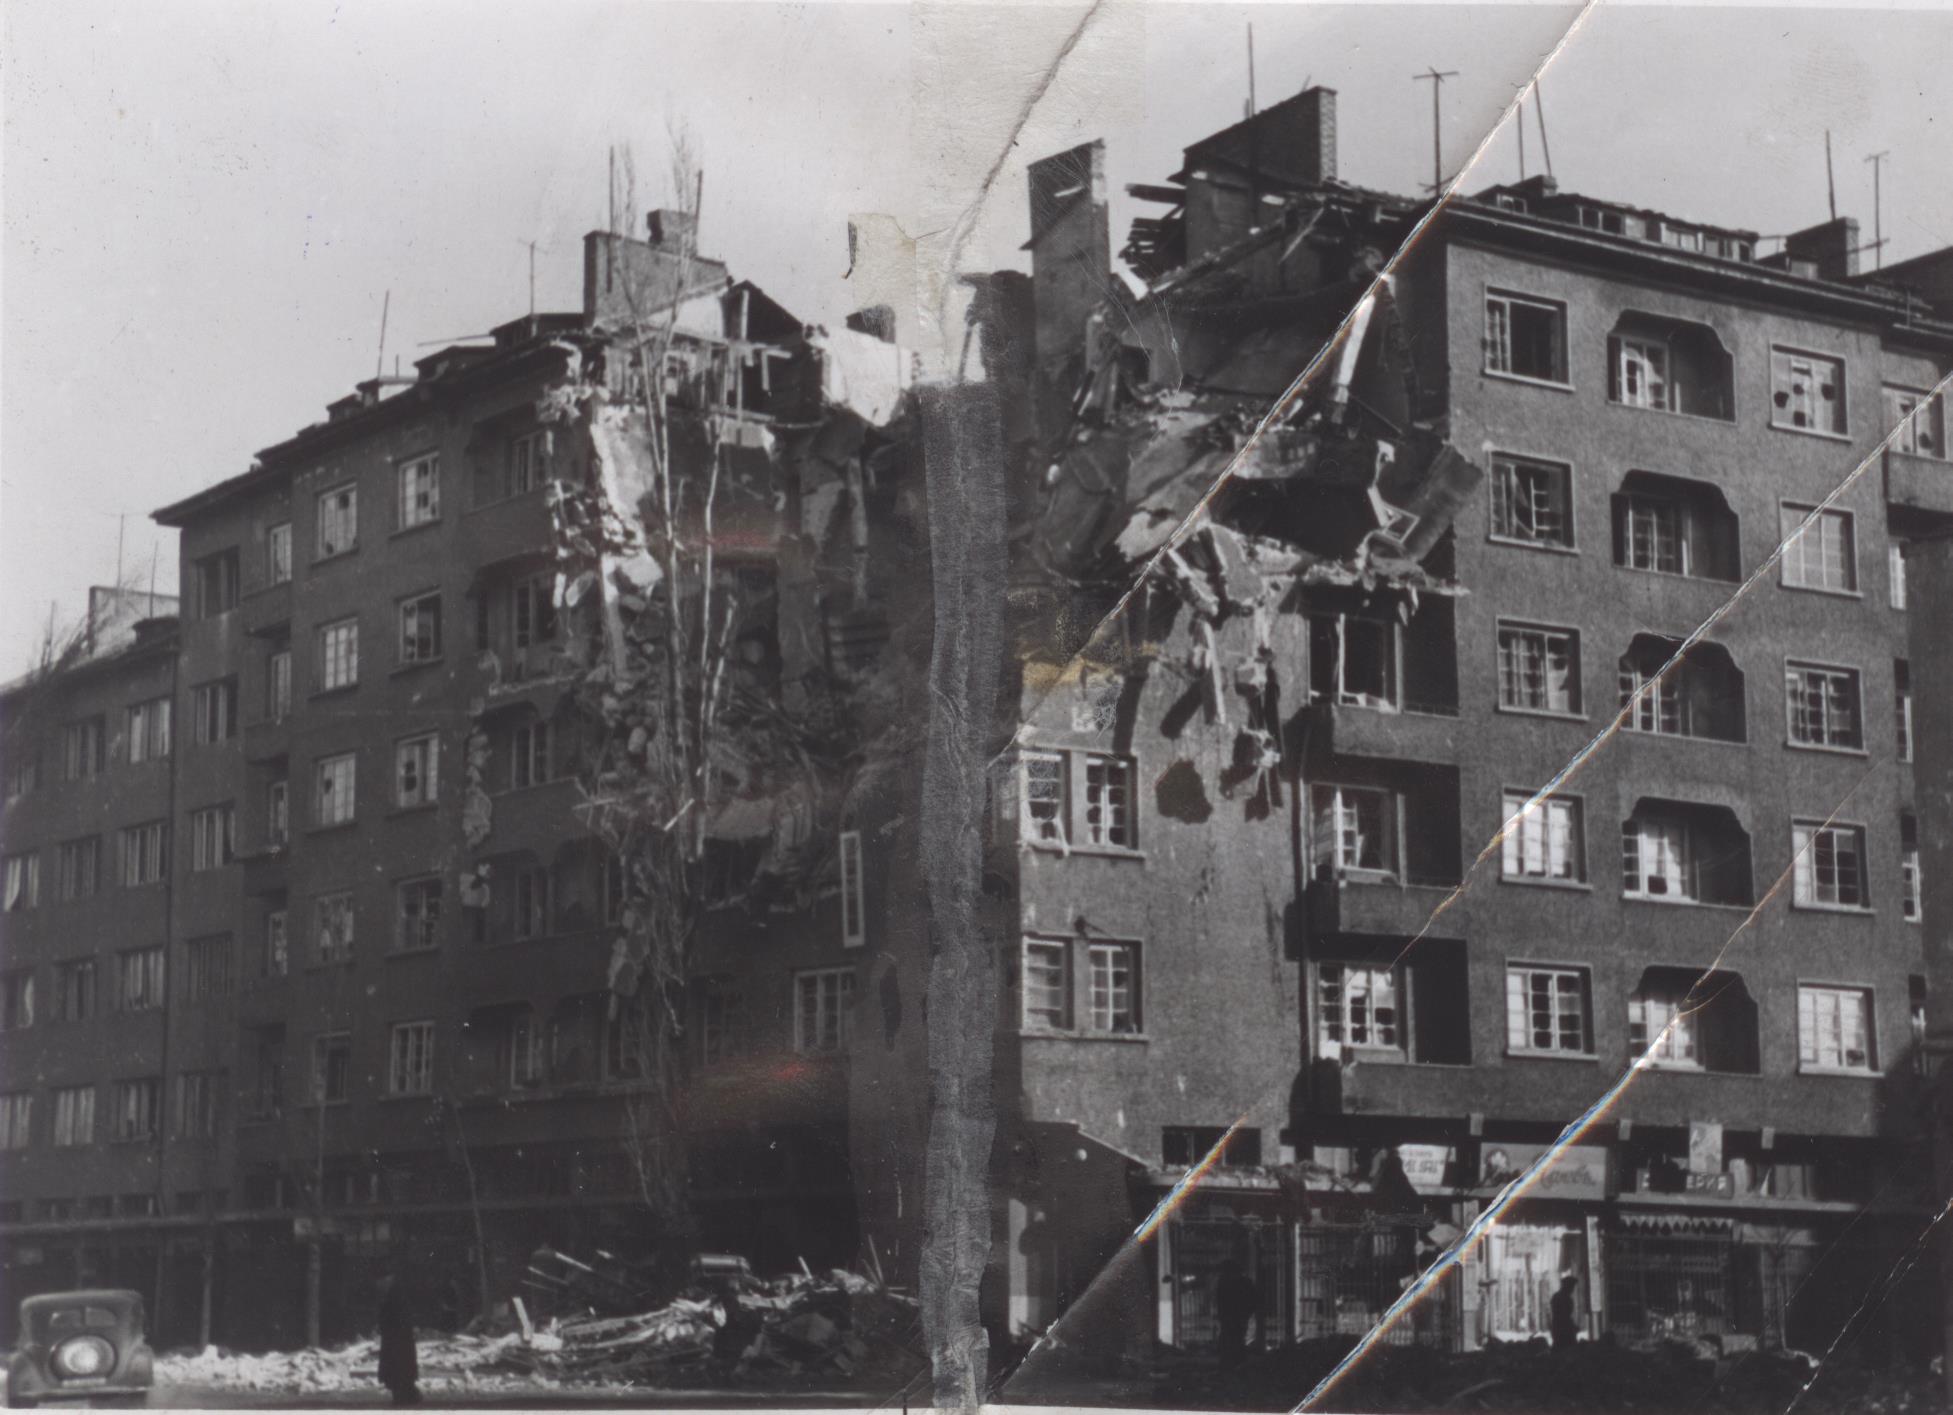 Sofia Bombings 1944: The crossing of Graf Ignatiev Str. and Ferdinand Blvd.